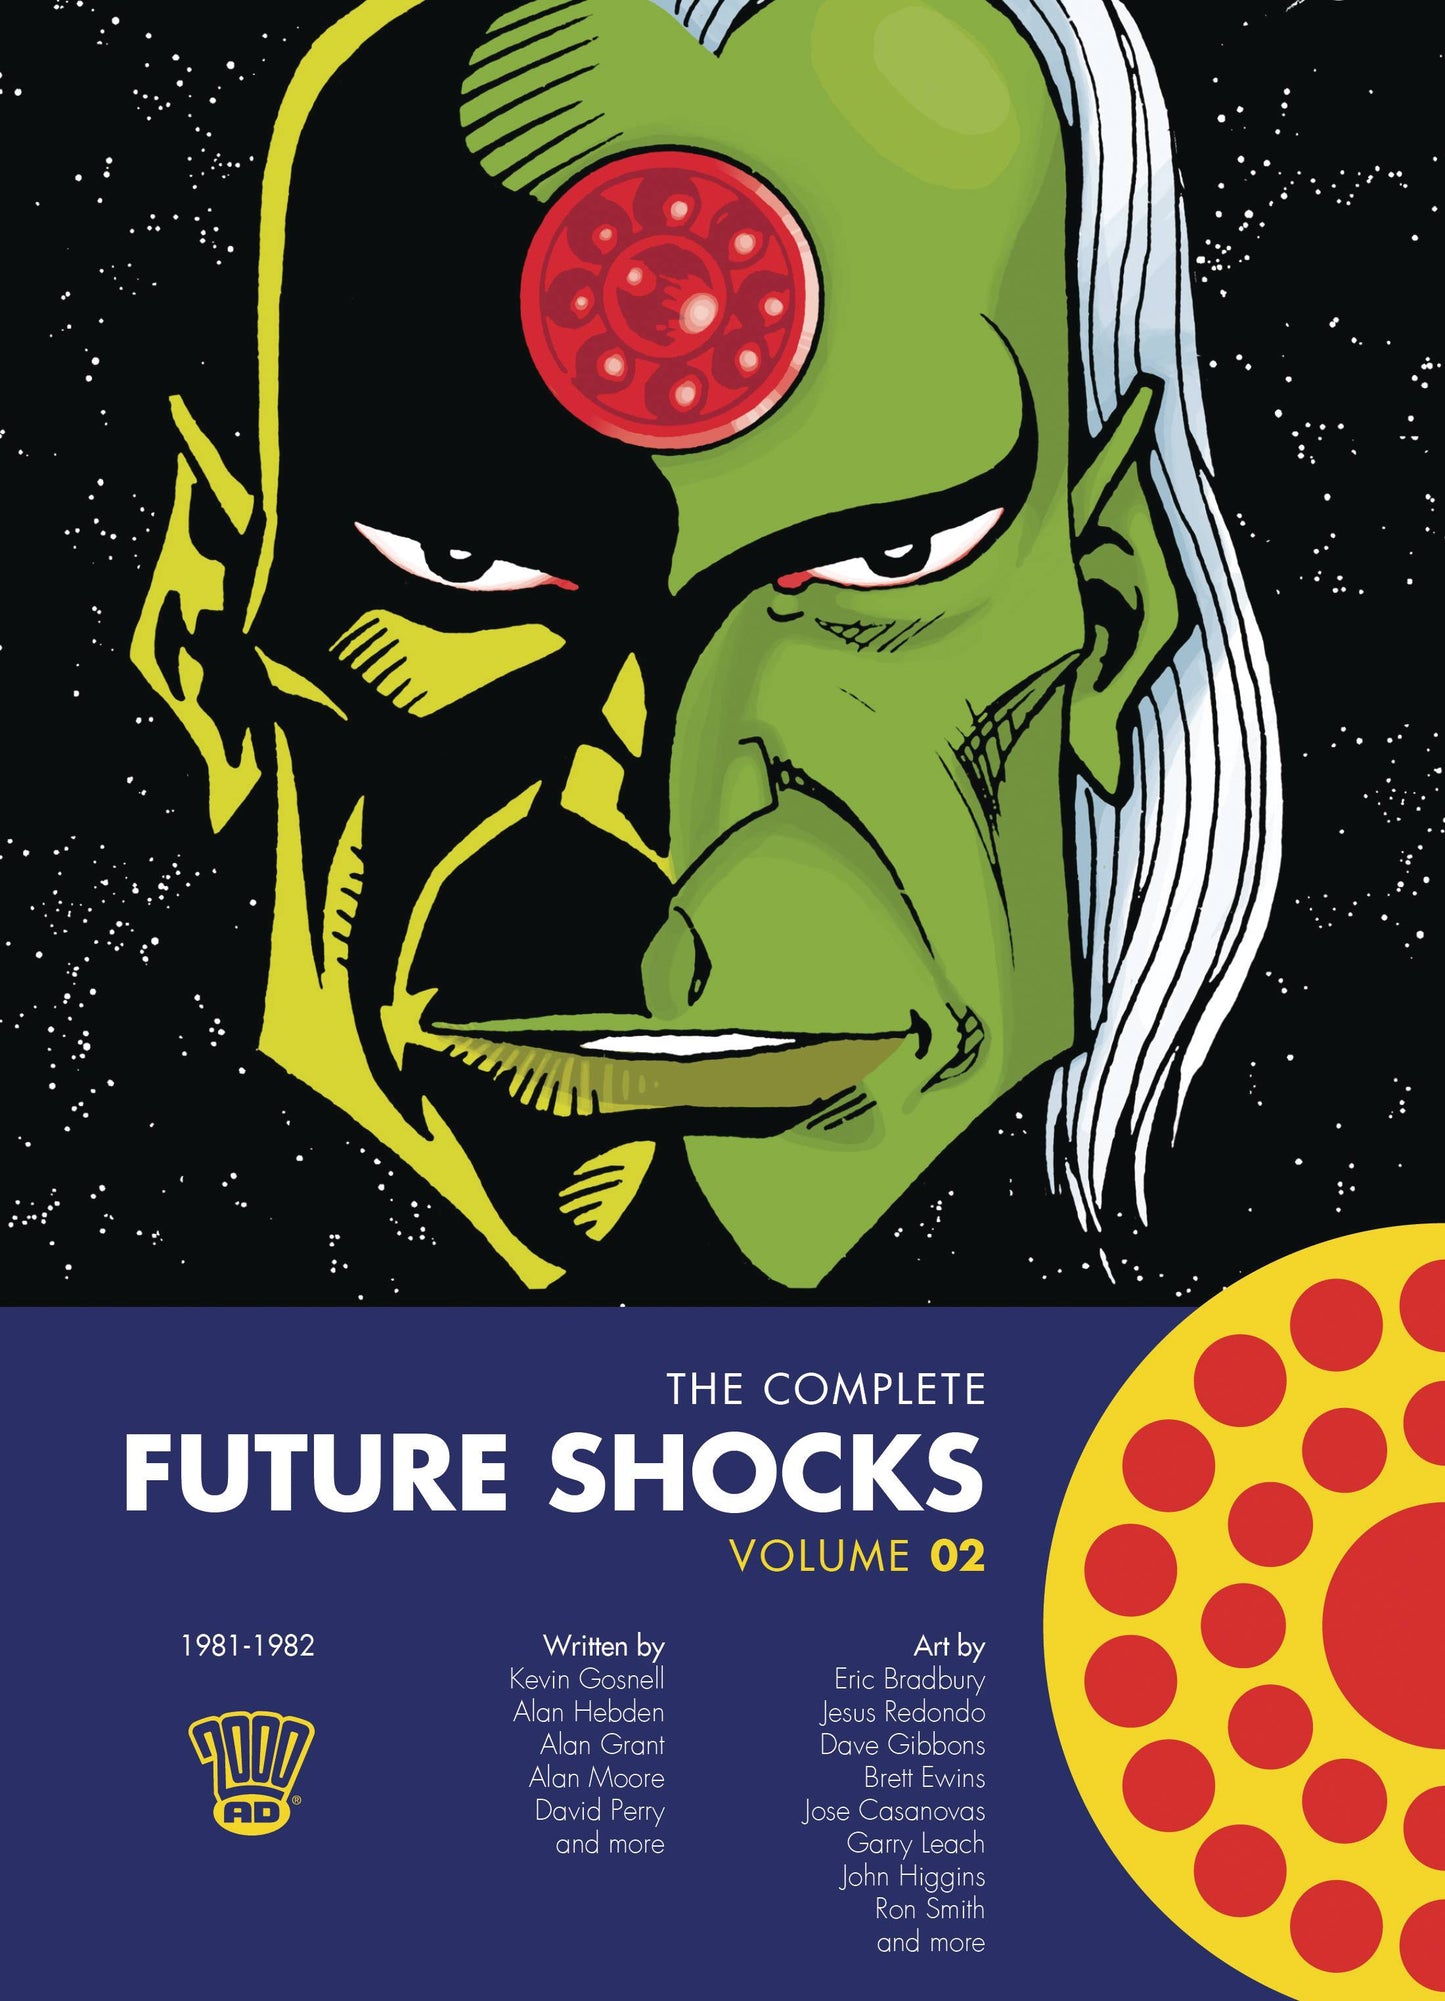 COMPLETE FUTURE SHOCKS VOLUME 02